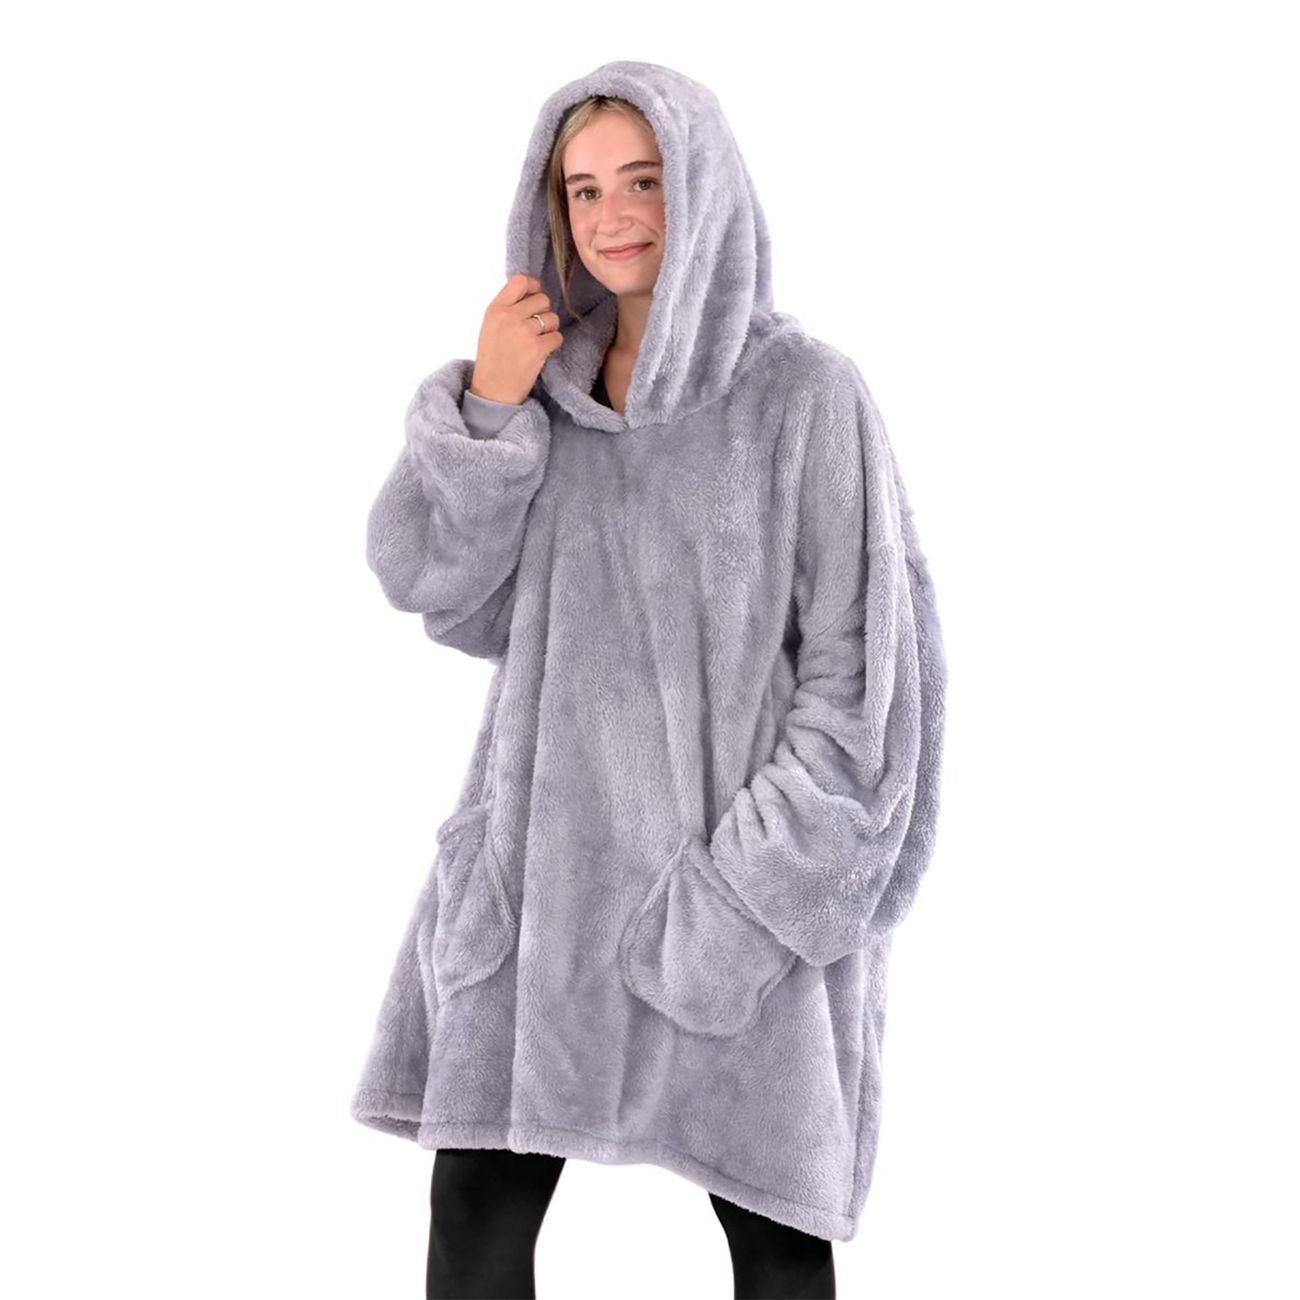 snug-rug-oversized-hoodie-91081-6